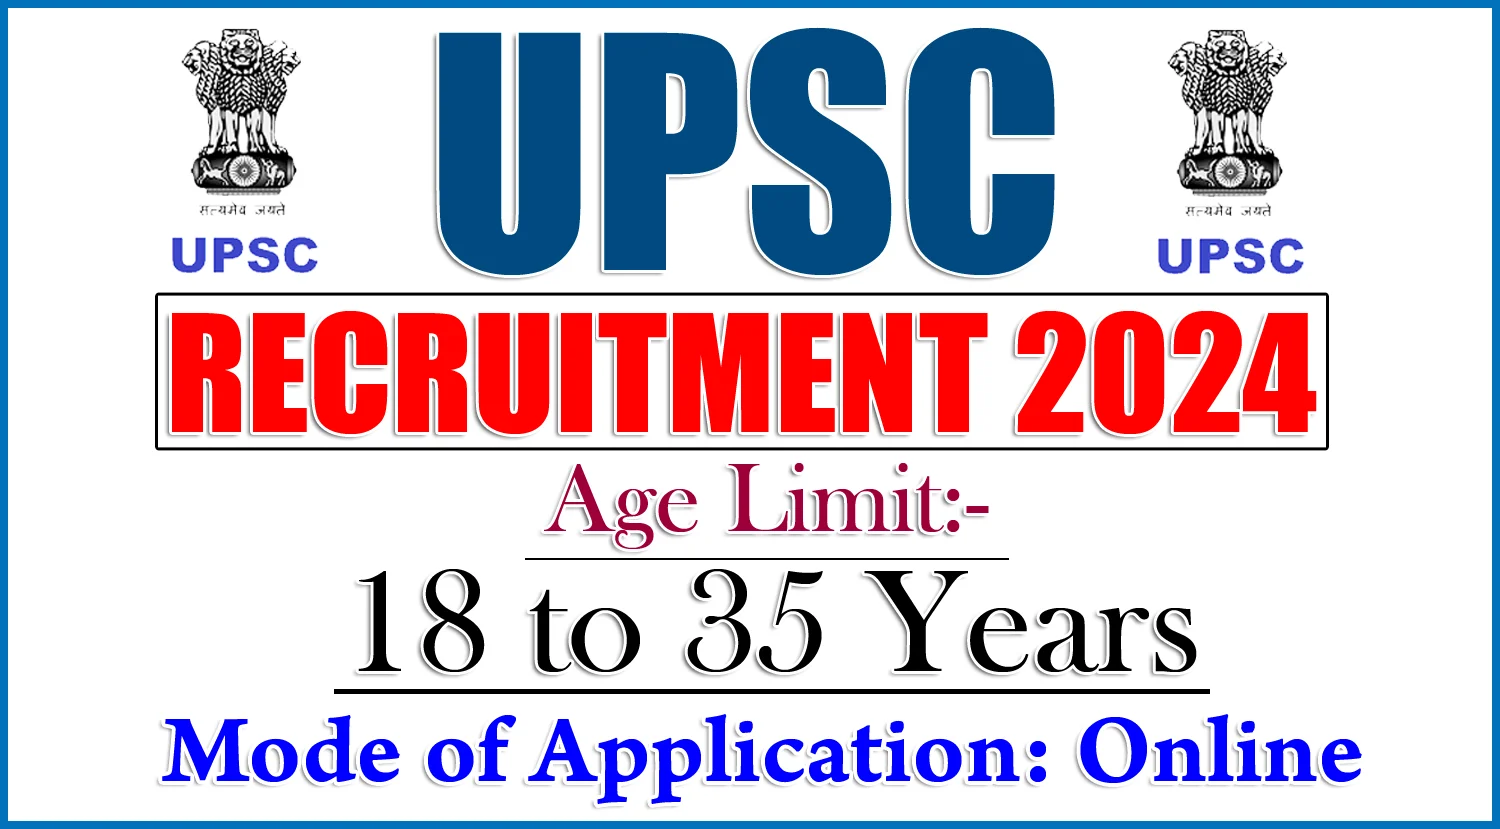 UPSC Group A Recruitment 2024